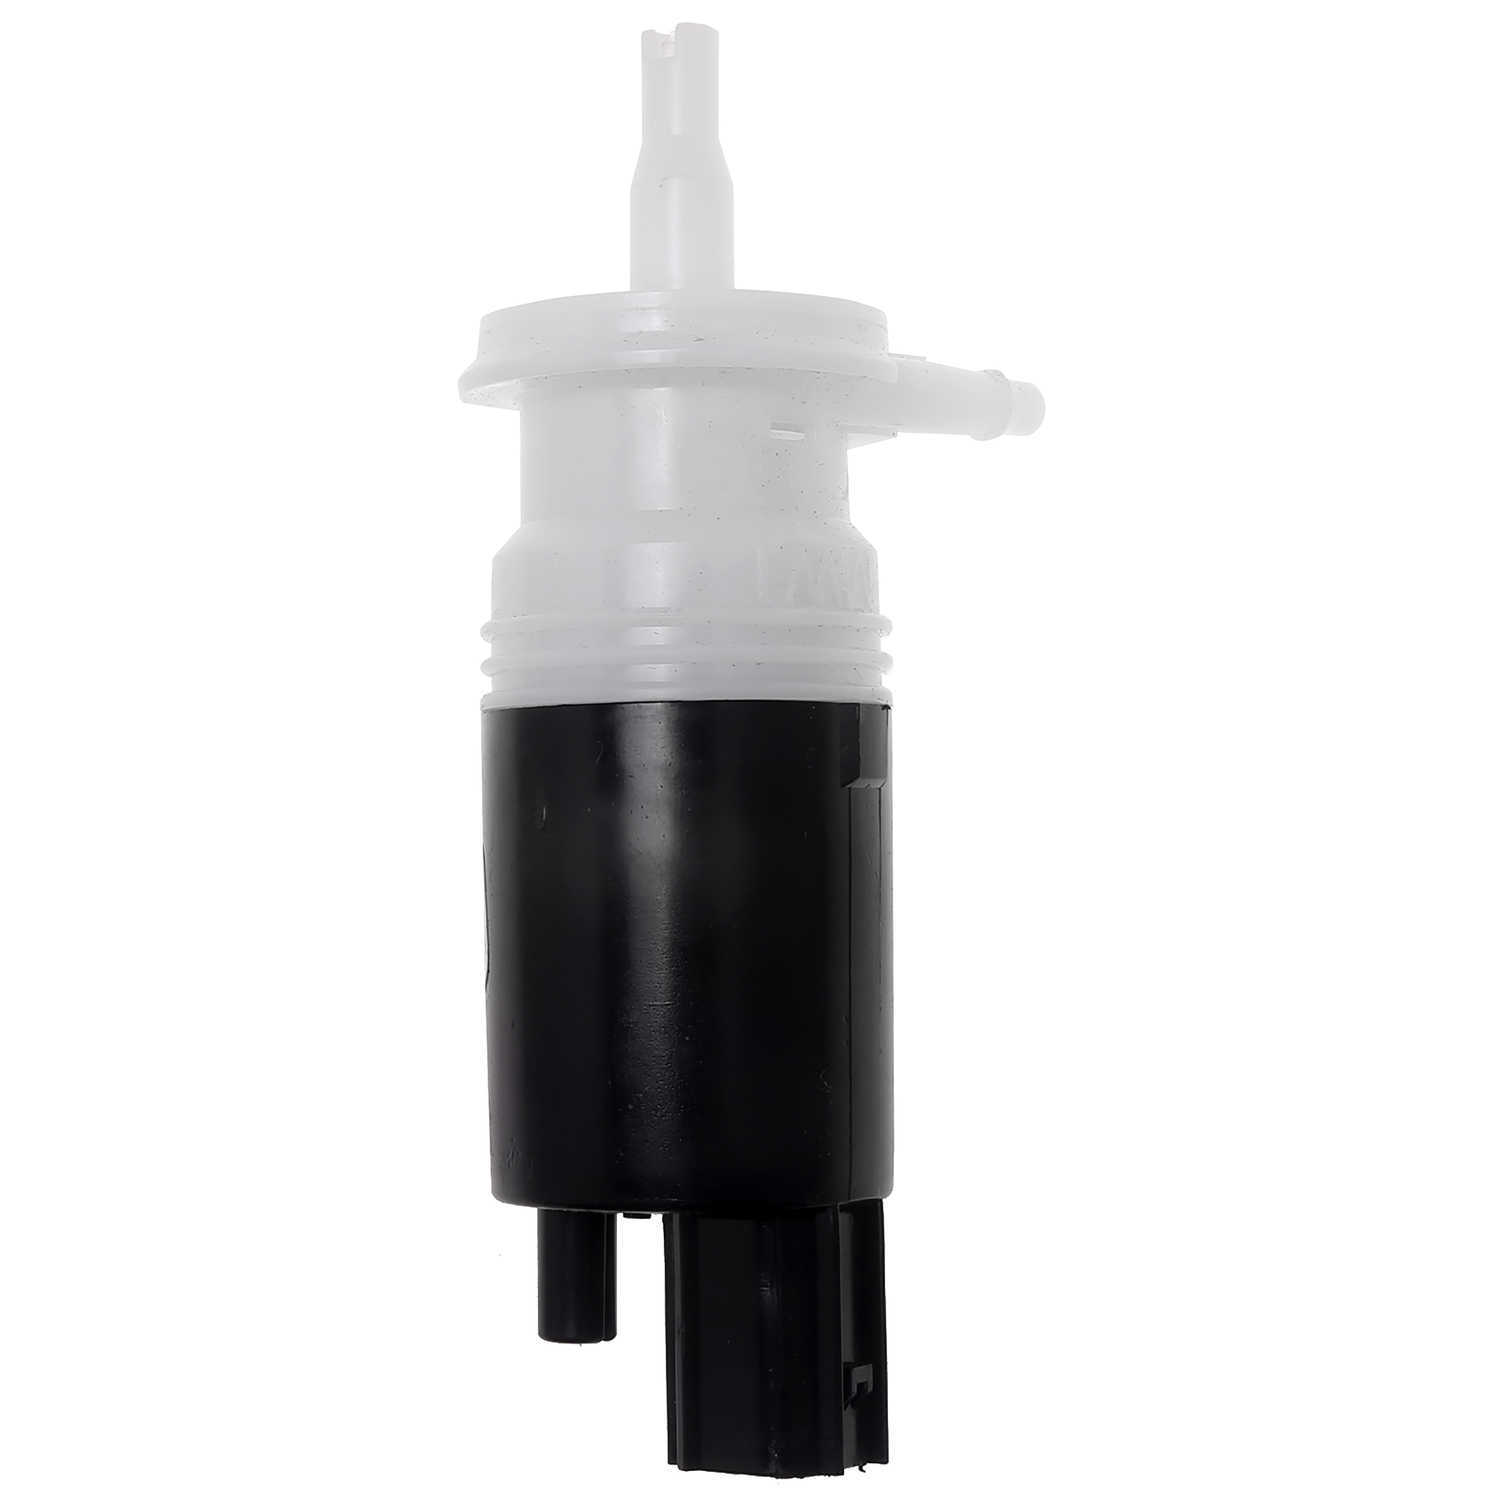 TRICO - TRICO Spray Windshield Washer Pump - TRI 11-530